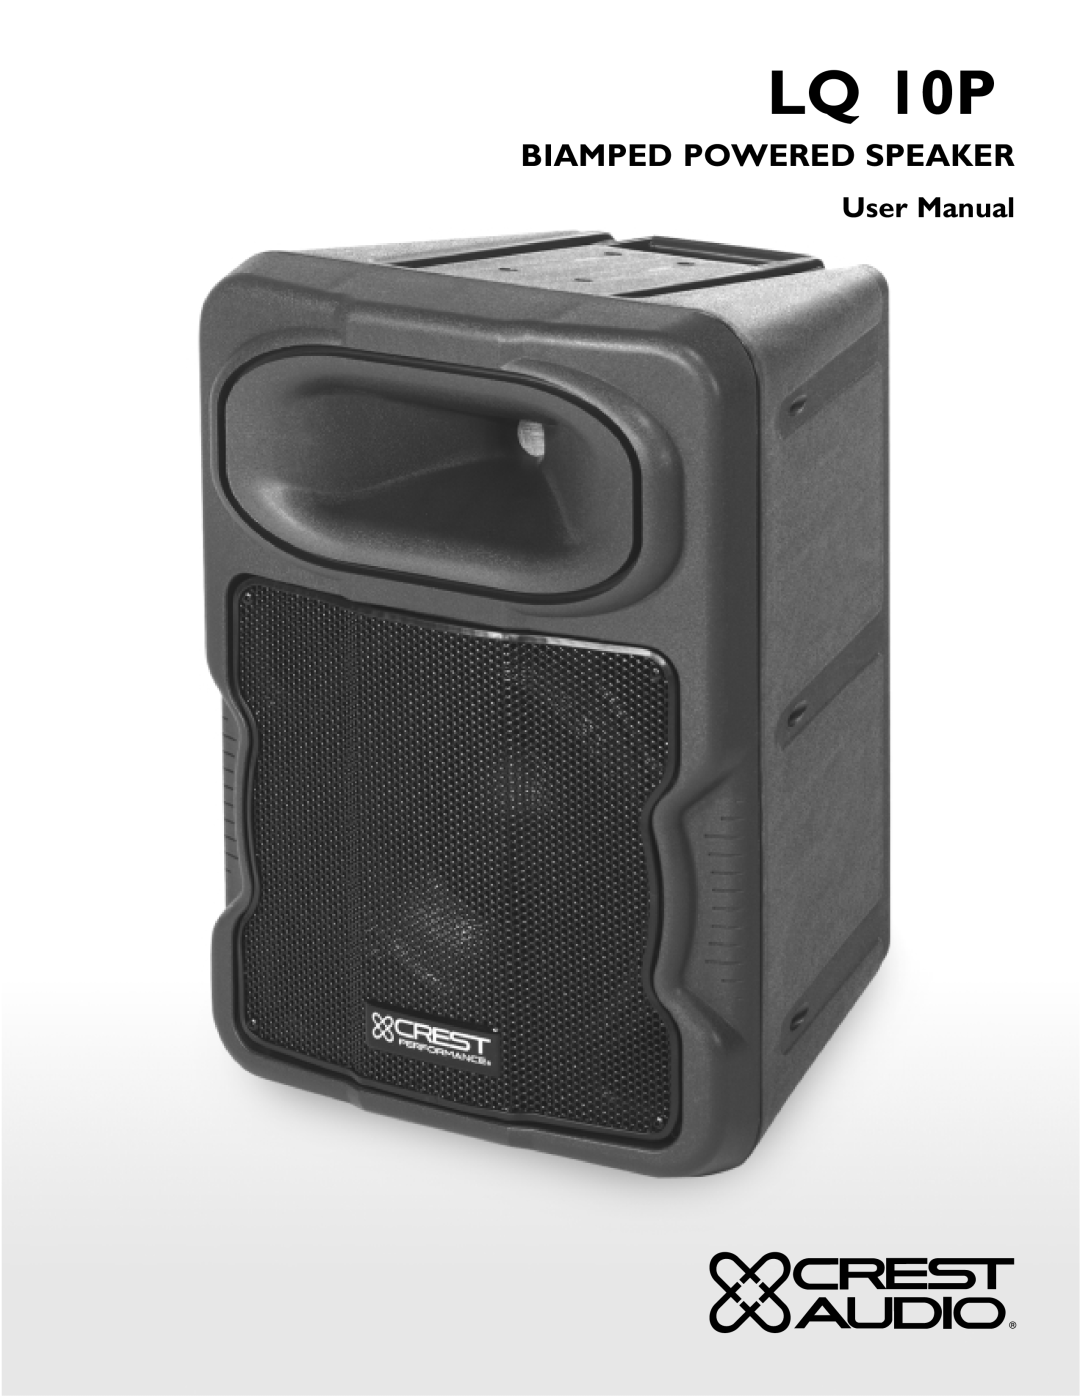 Crest Audio LQ 10P user manual Biamped Powered Speaker, User Manual 